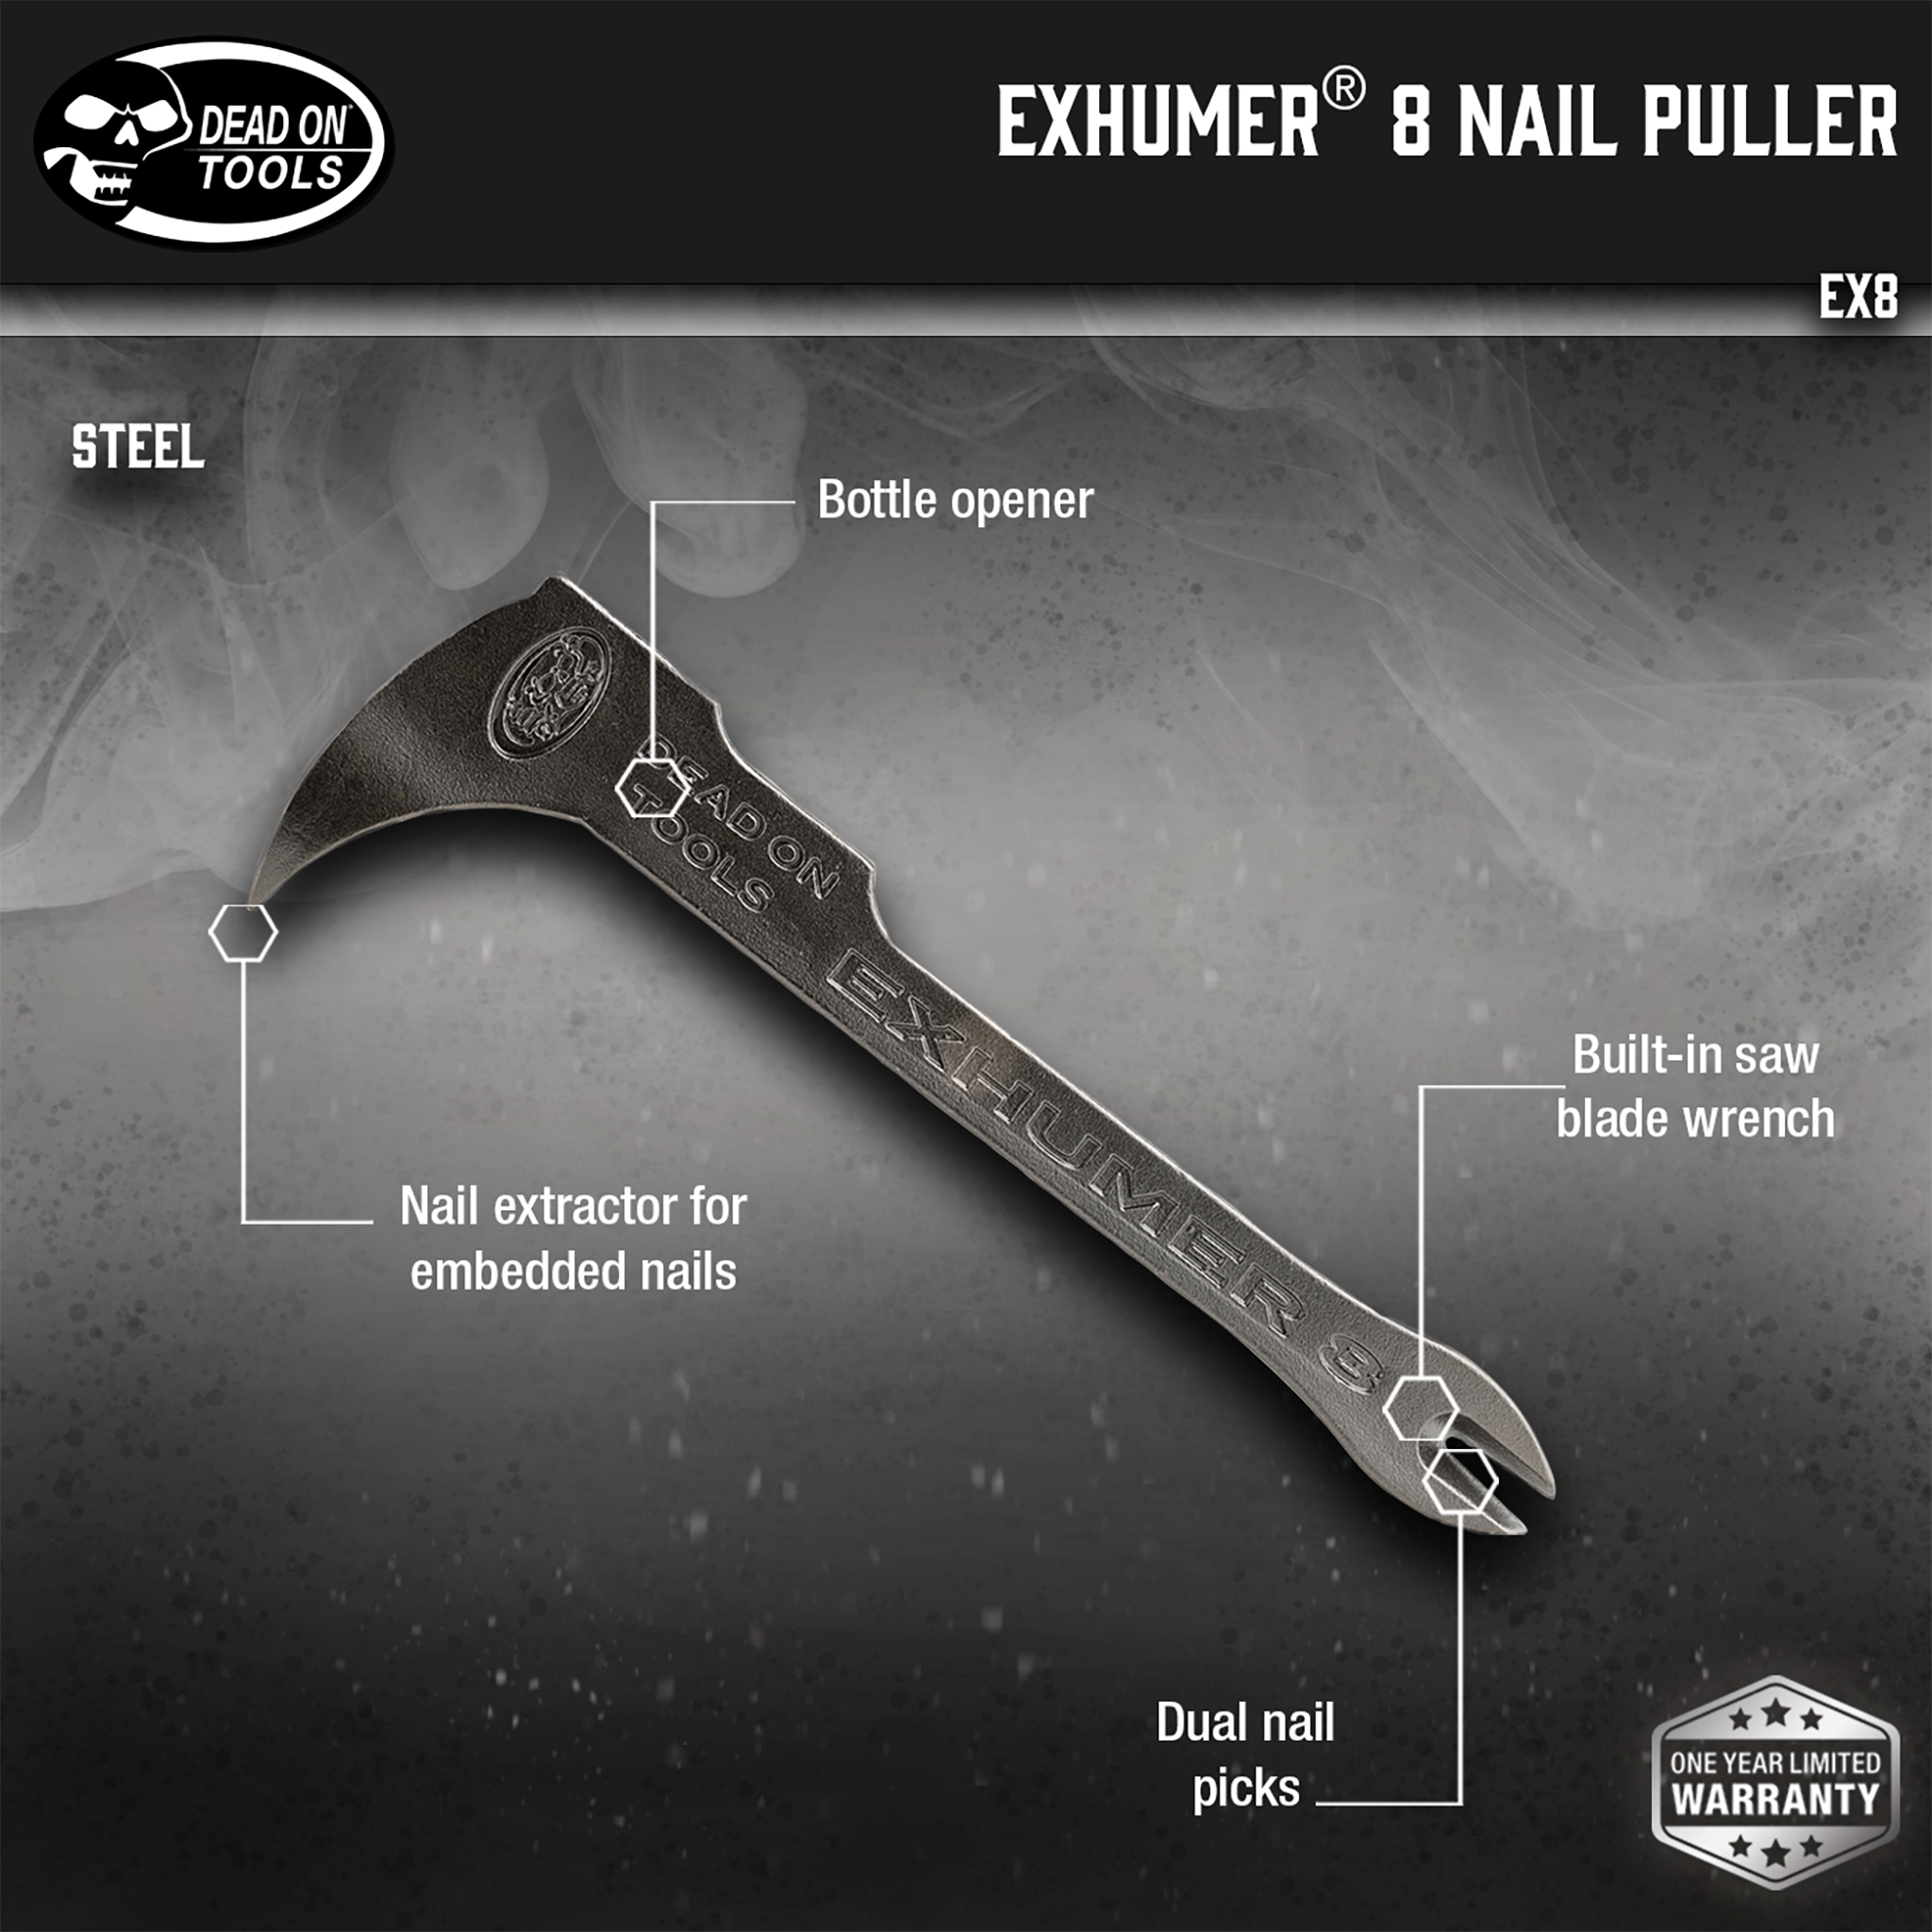 Exhumer 8 Nail Puller